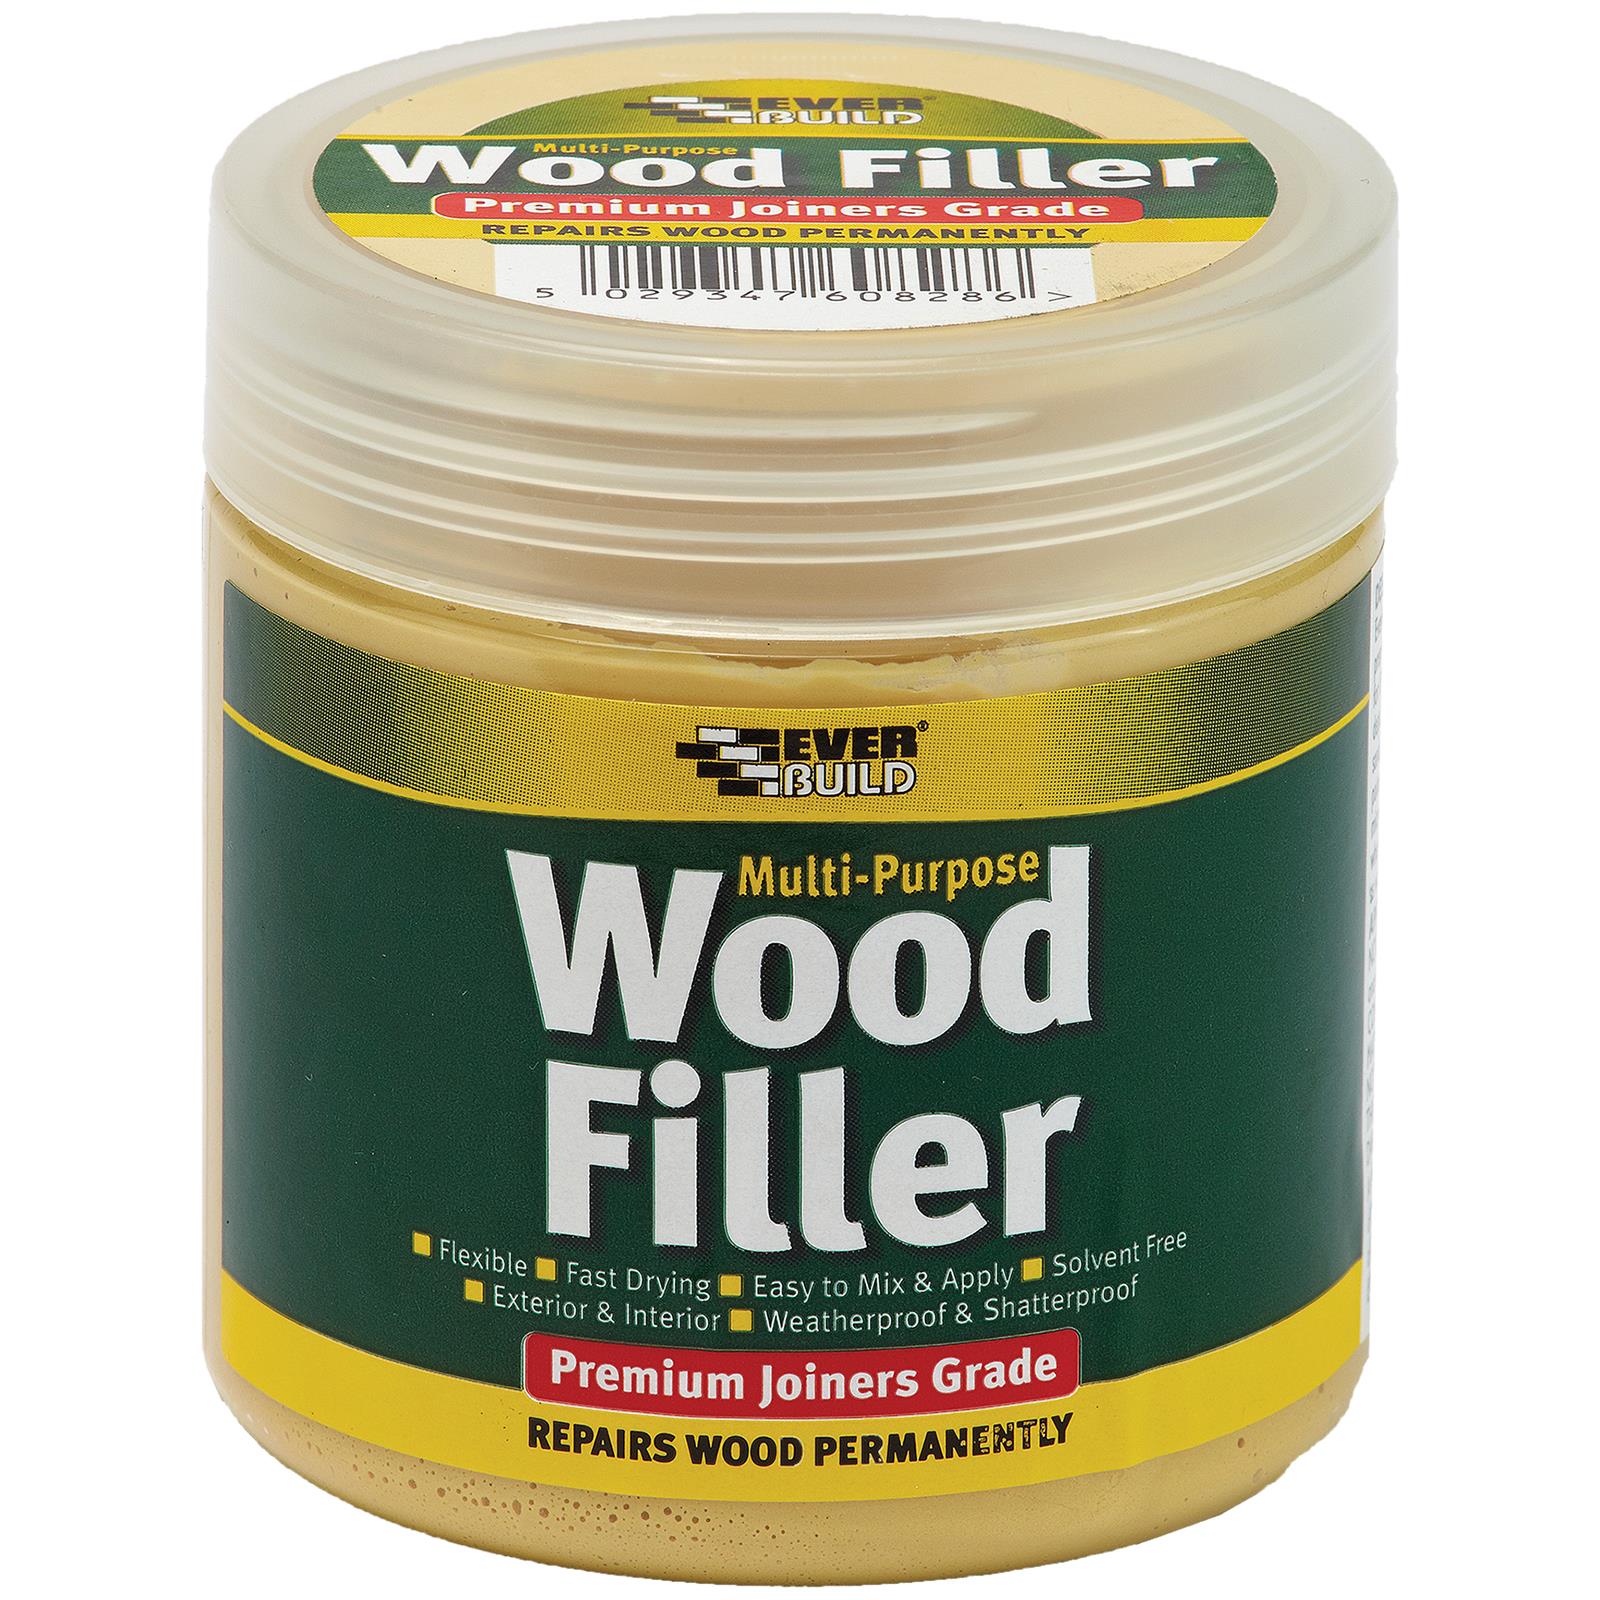 EverBuild Wood Filler Multi Purpose 250ml Premium Joiners Grade Ready Mixed